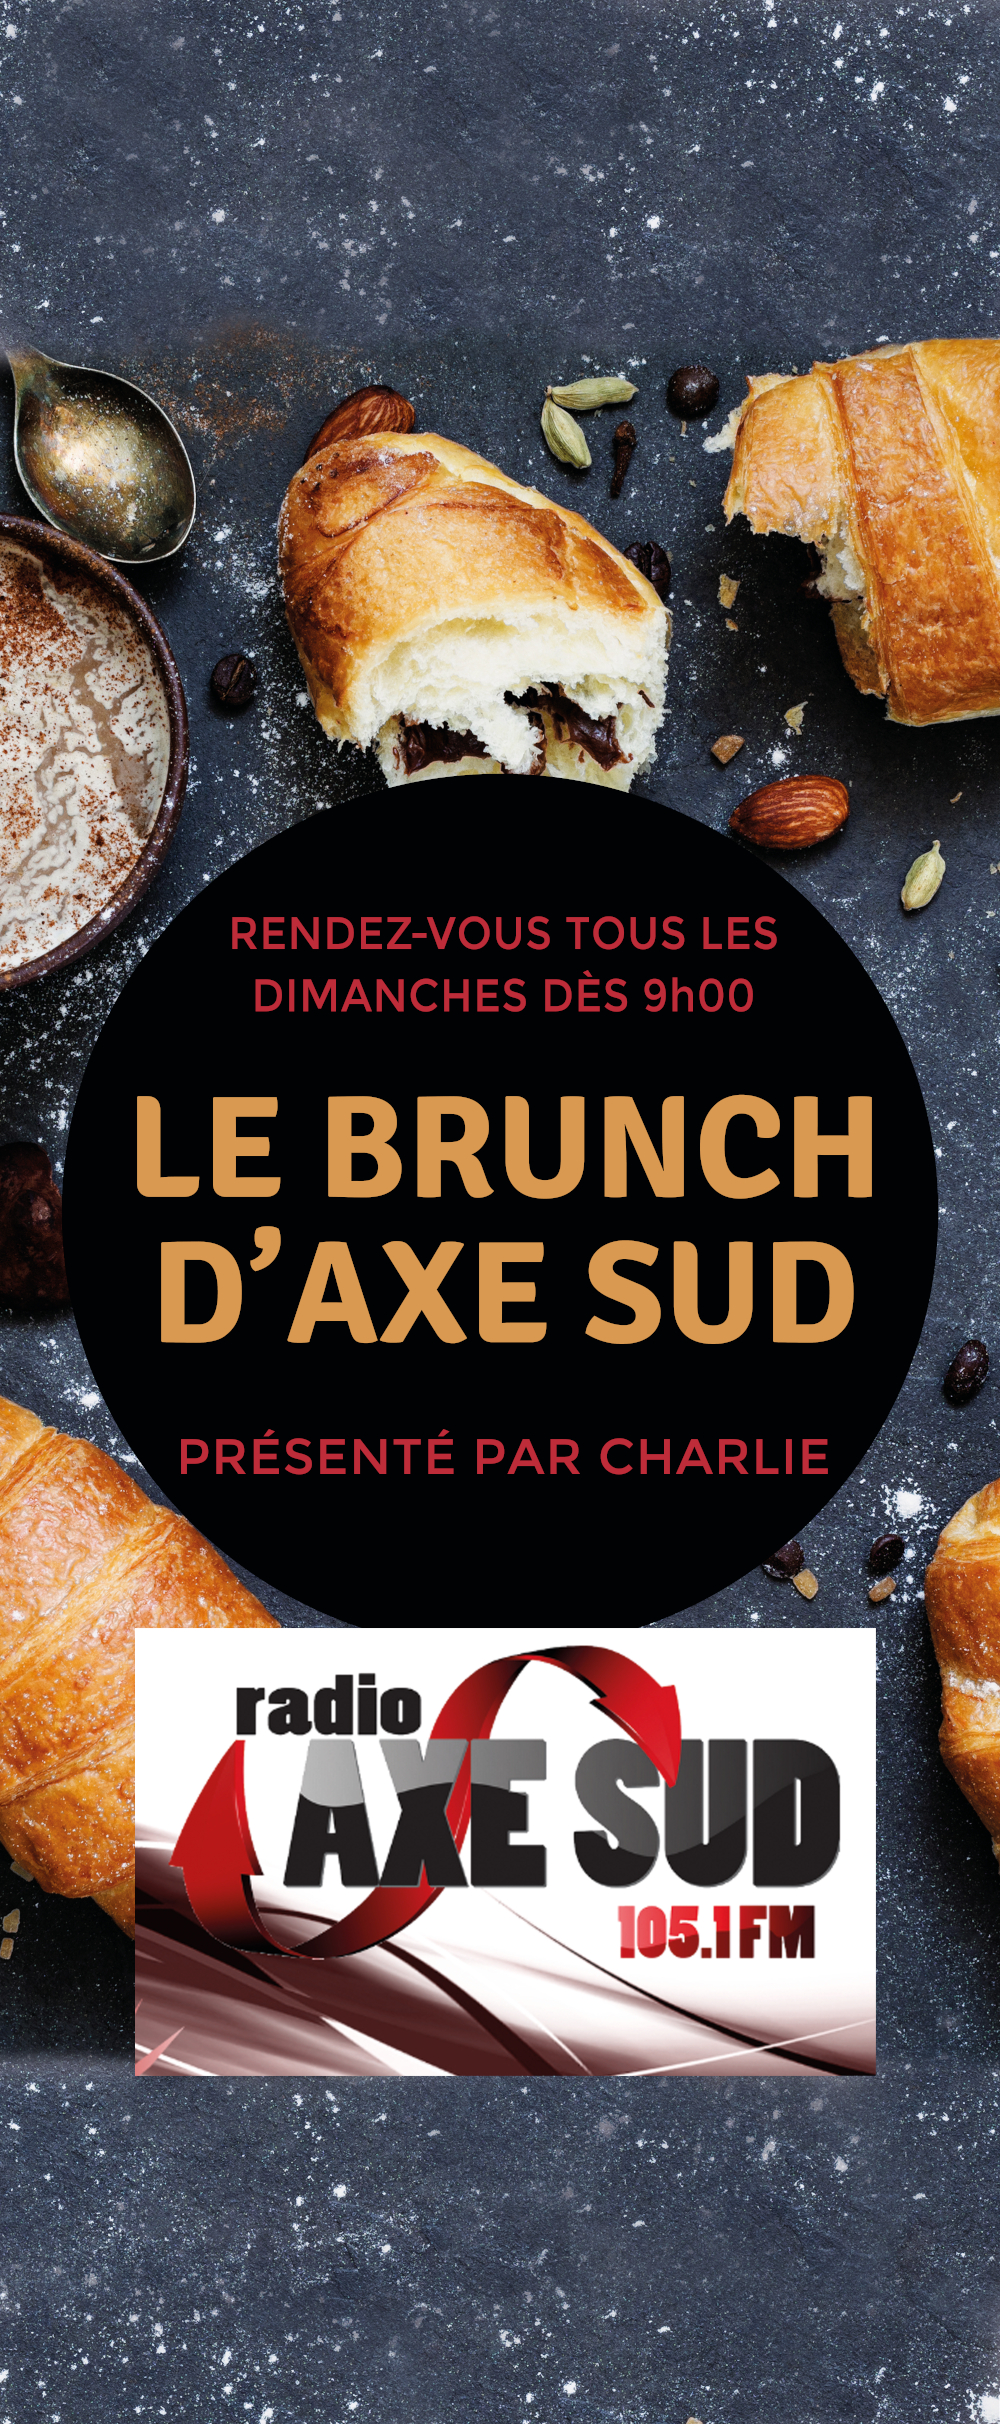 Le Brunch Charlie Radio Axe sud Muret